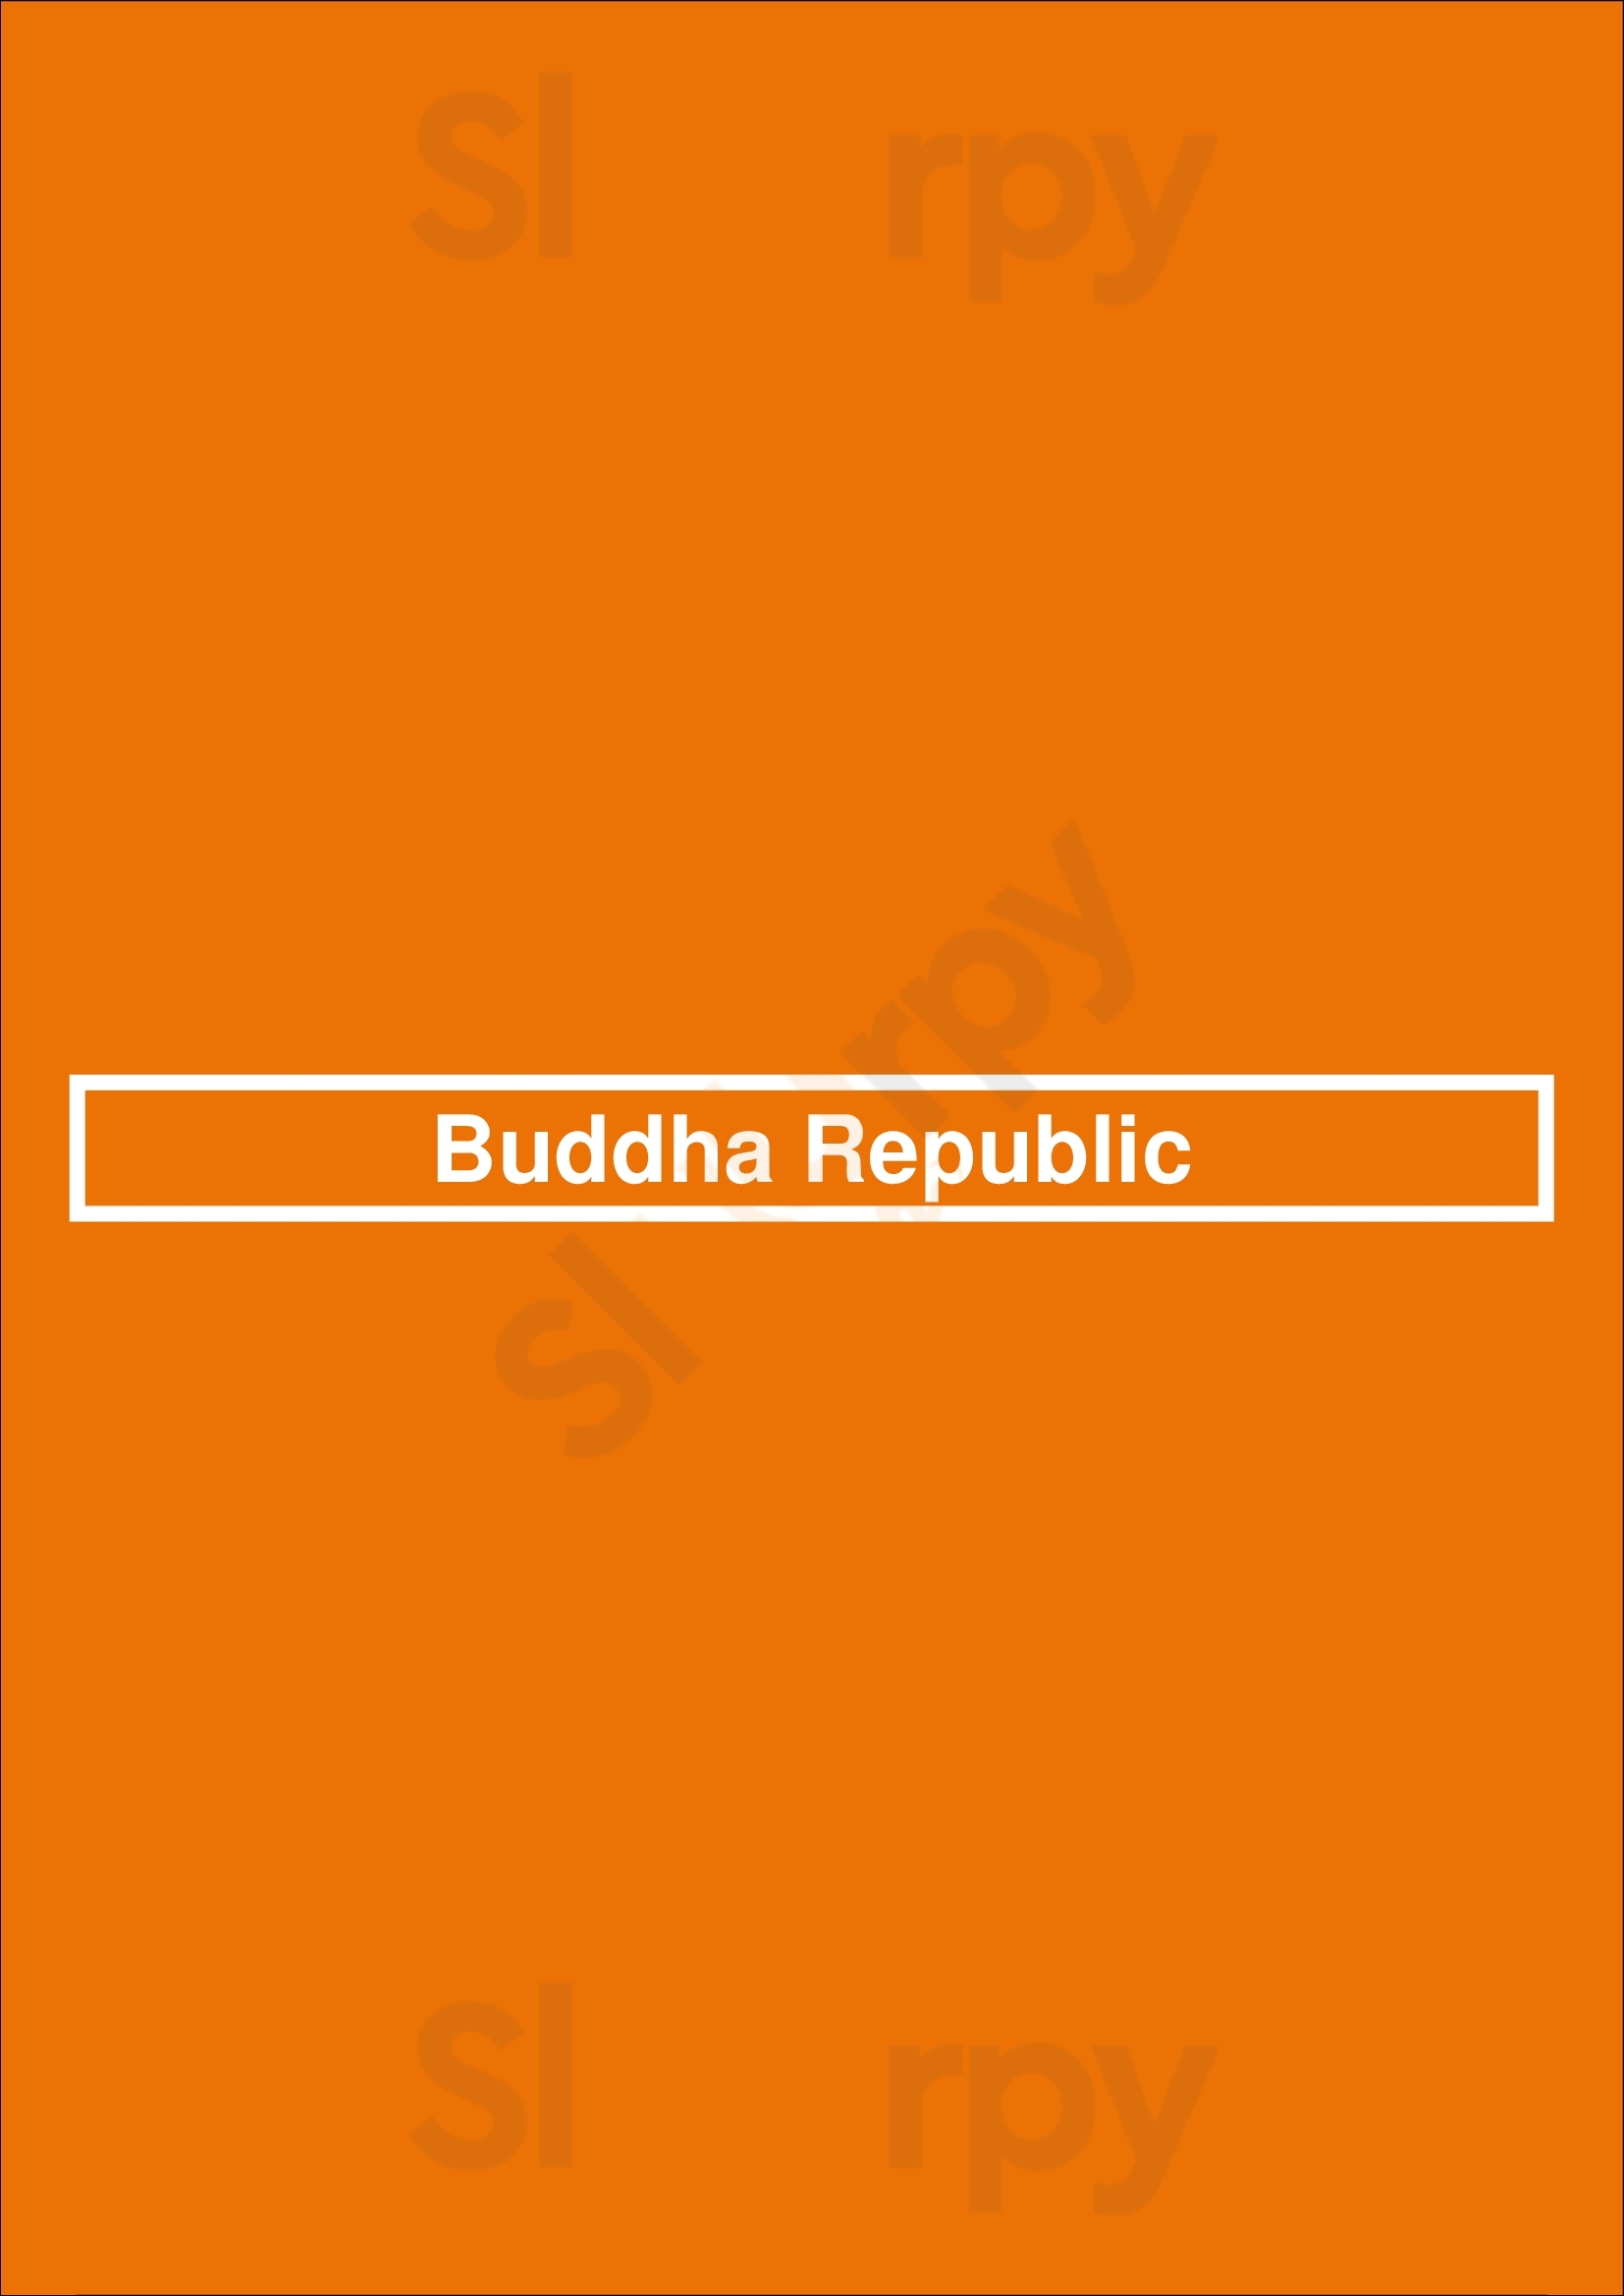 Buddha Republic Berlin Menu - 1